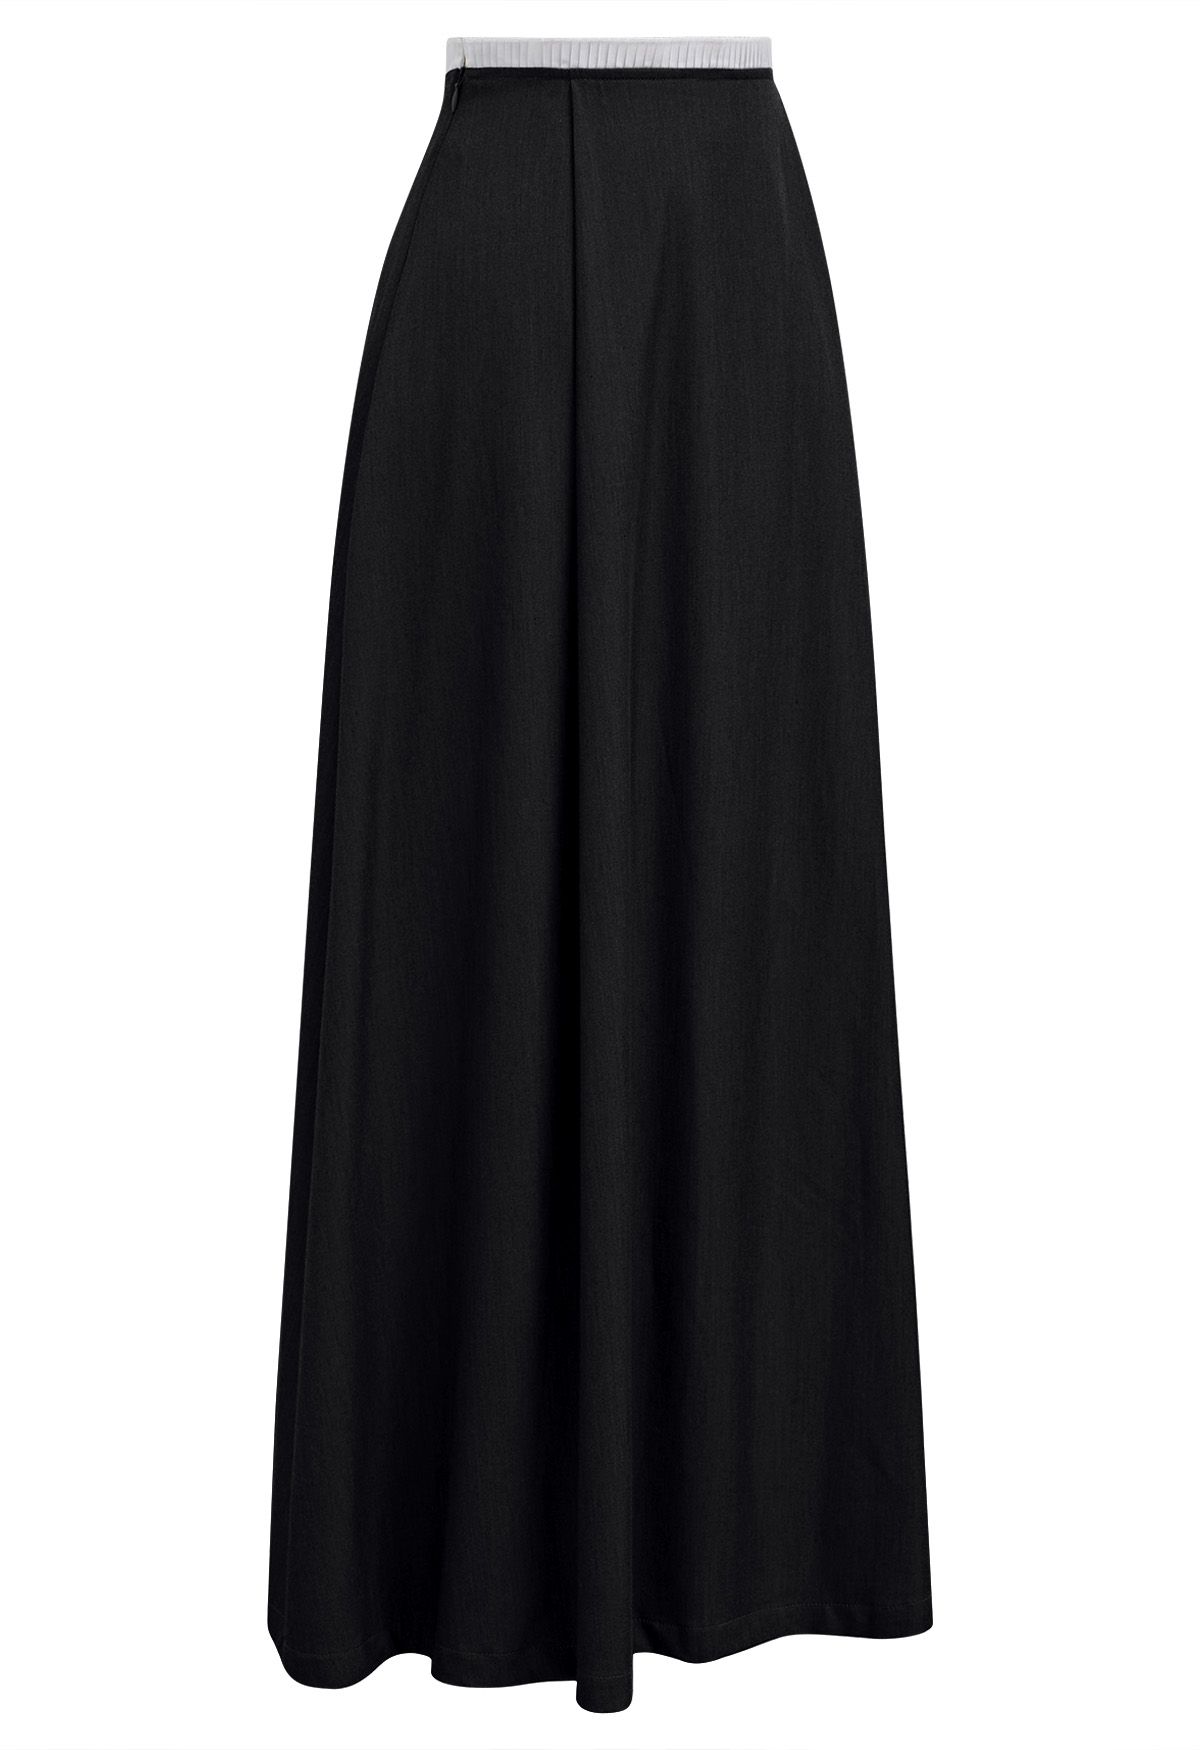 Contrast Pleat Waistband Maxi Skirt in Black